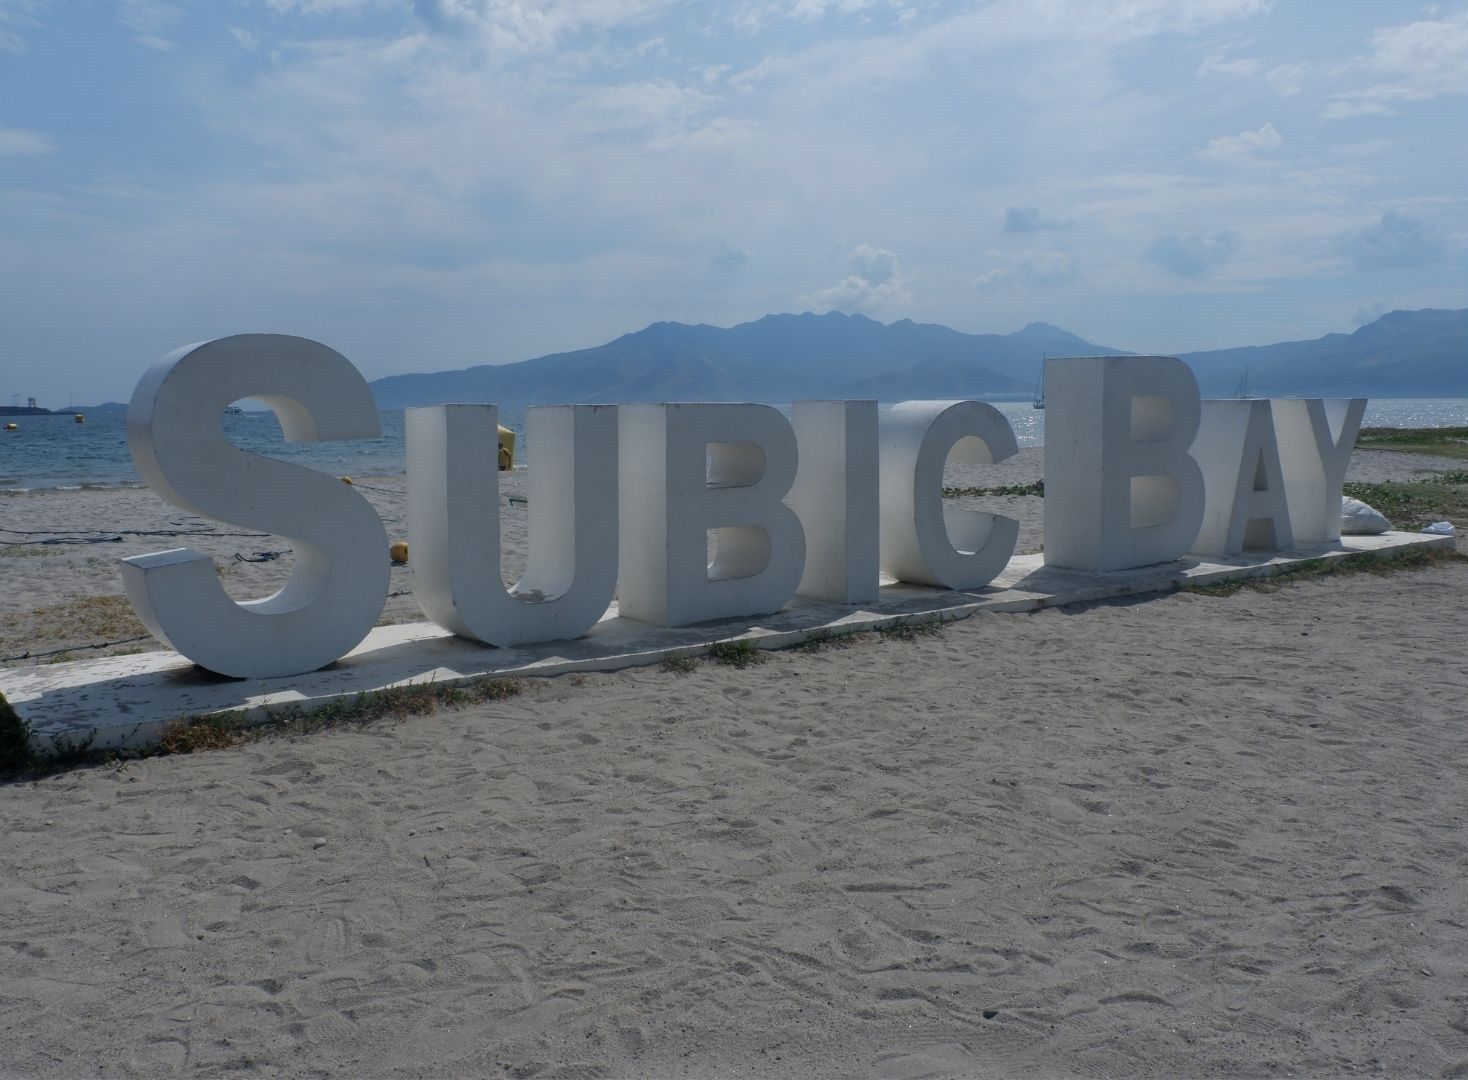 Lakbay Norte: A visit to Subic Bay